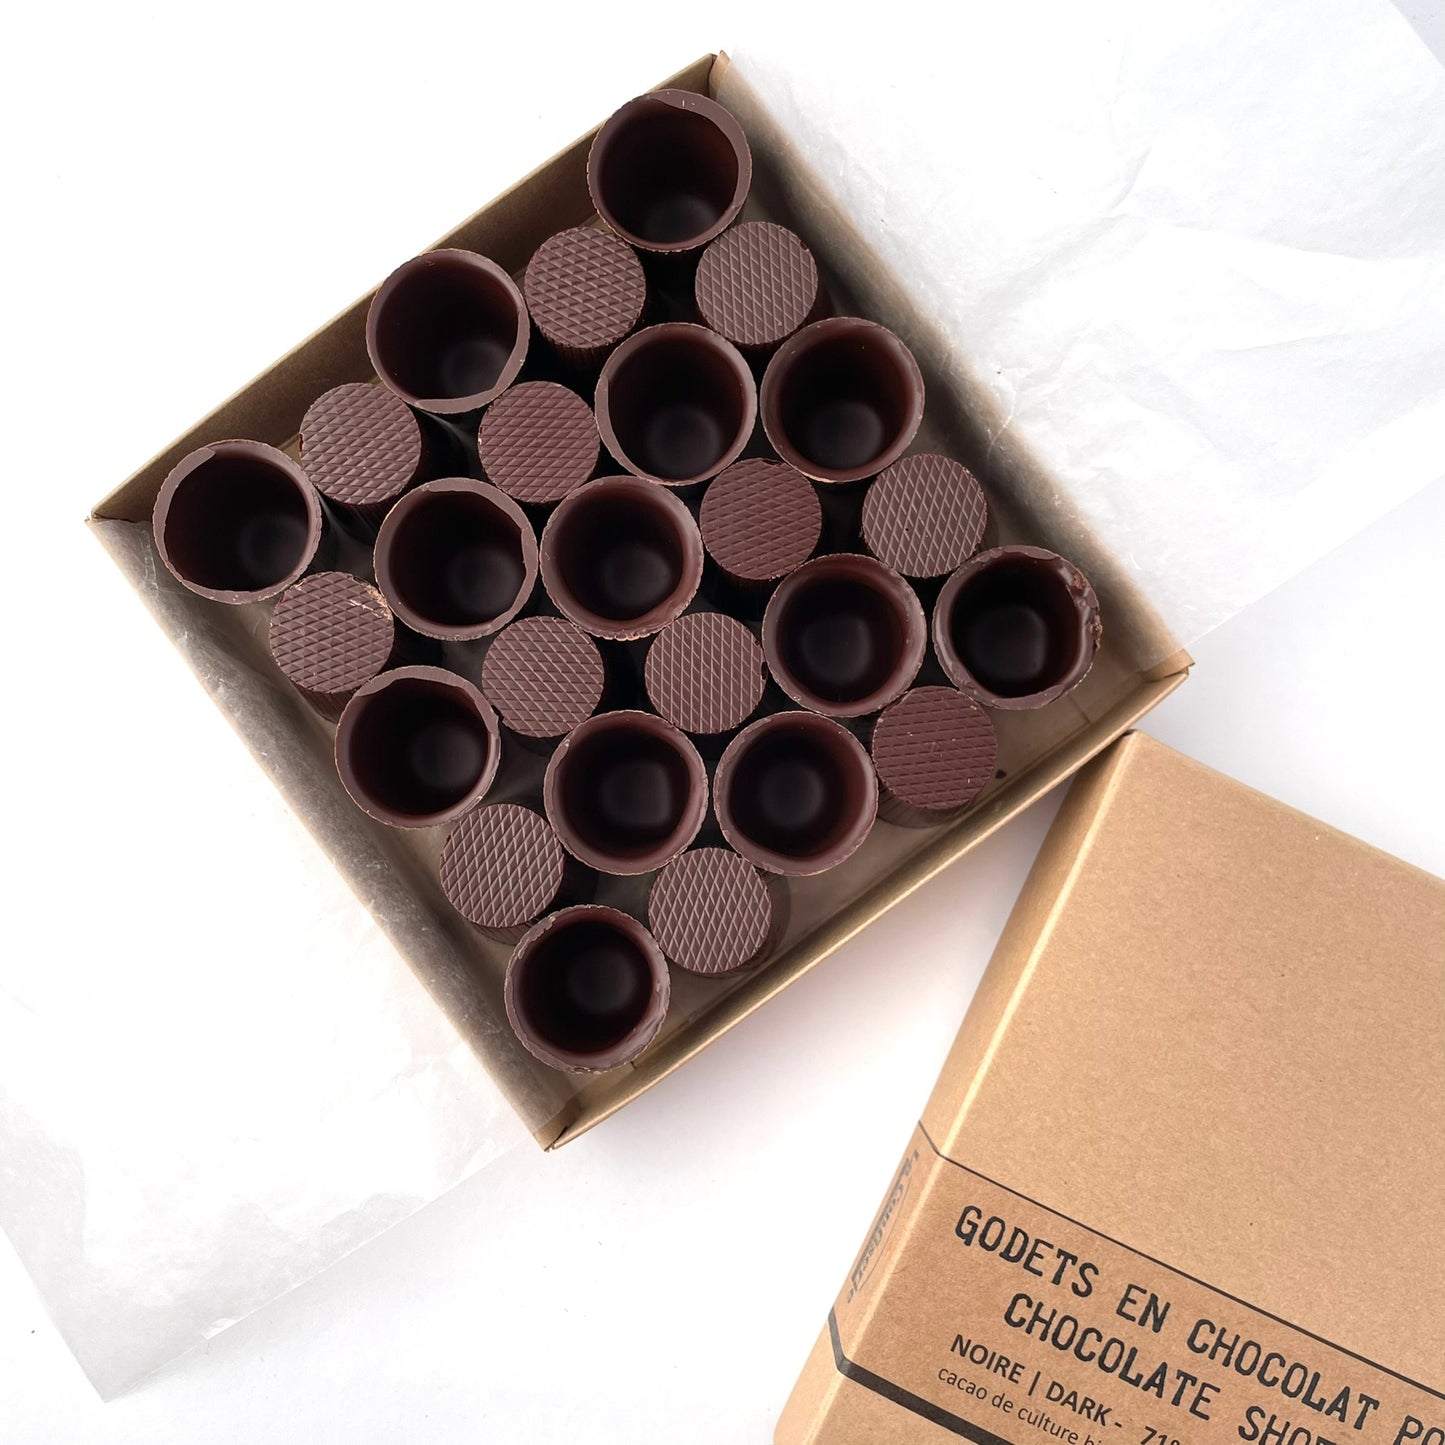 Chocolate shots made of dark chocolate 71% cacao - box of 25